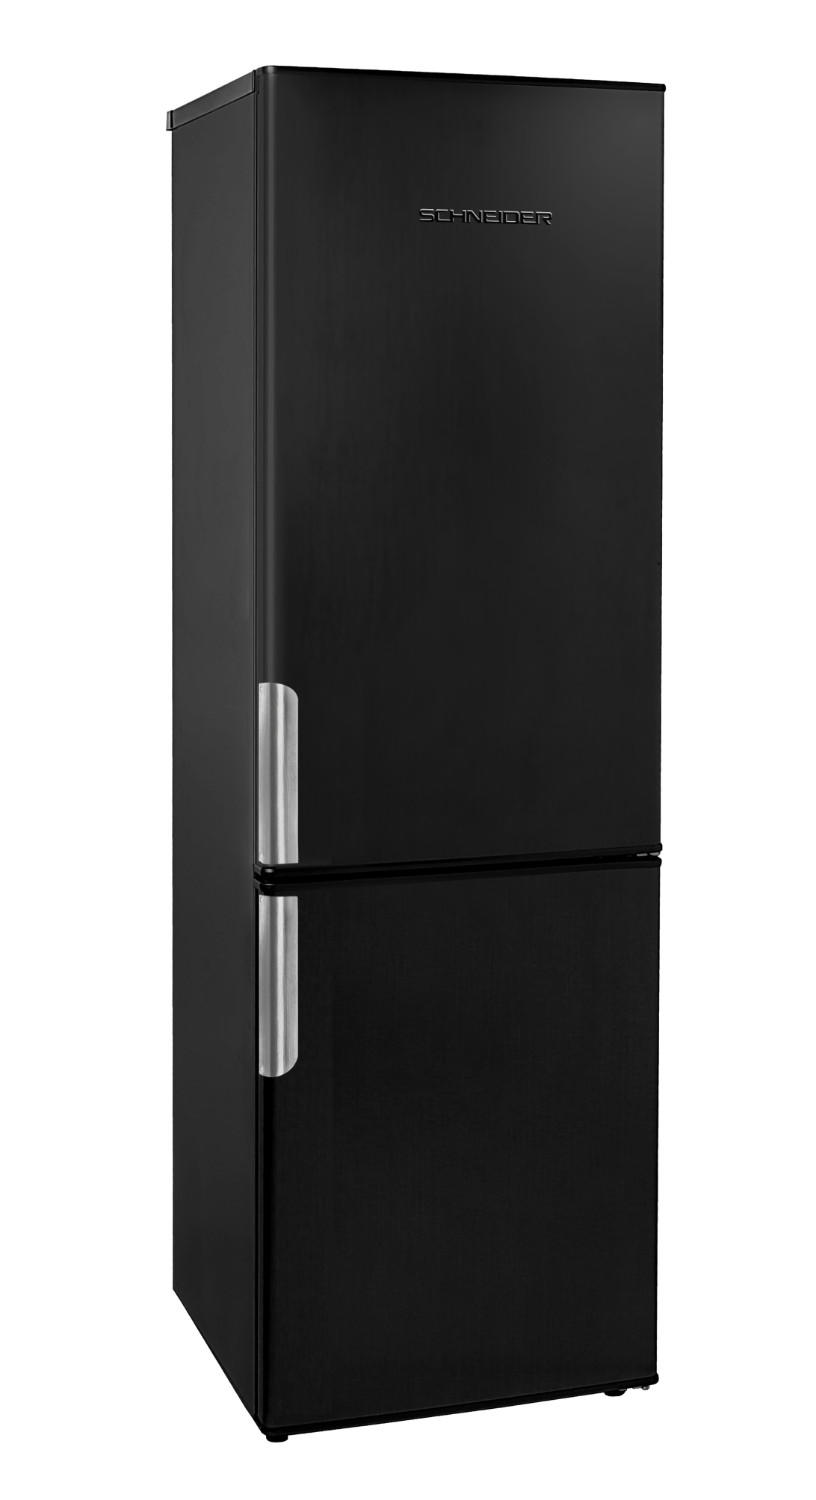 Refrigerator freezer combo black 300 L - Schneider